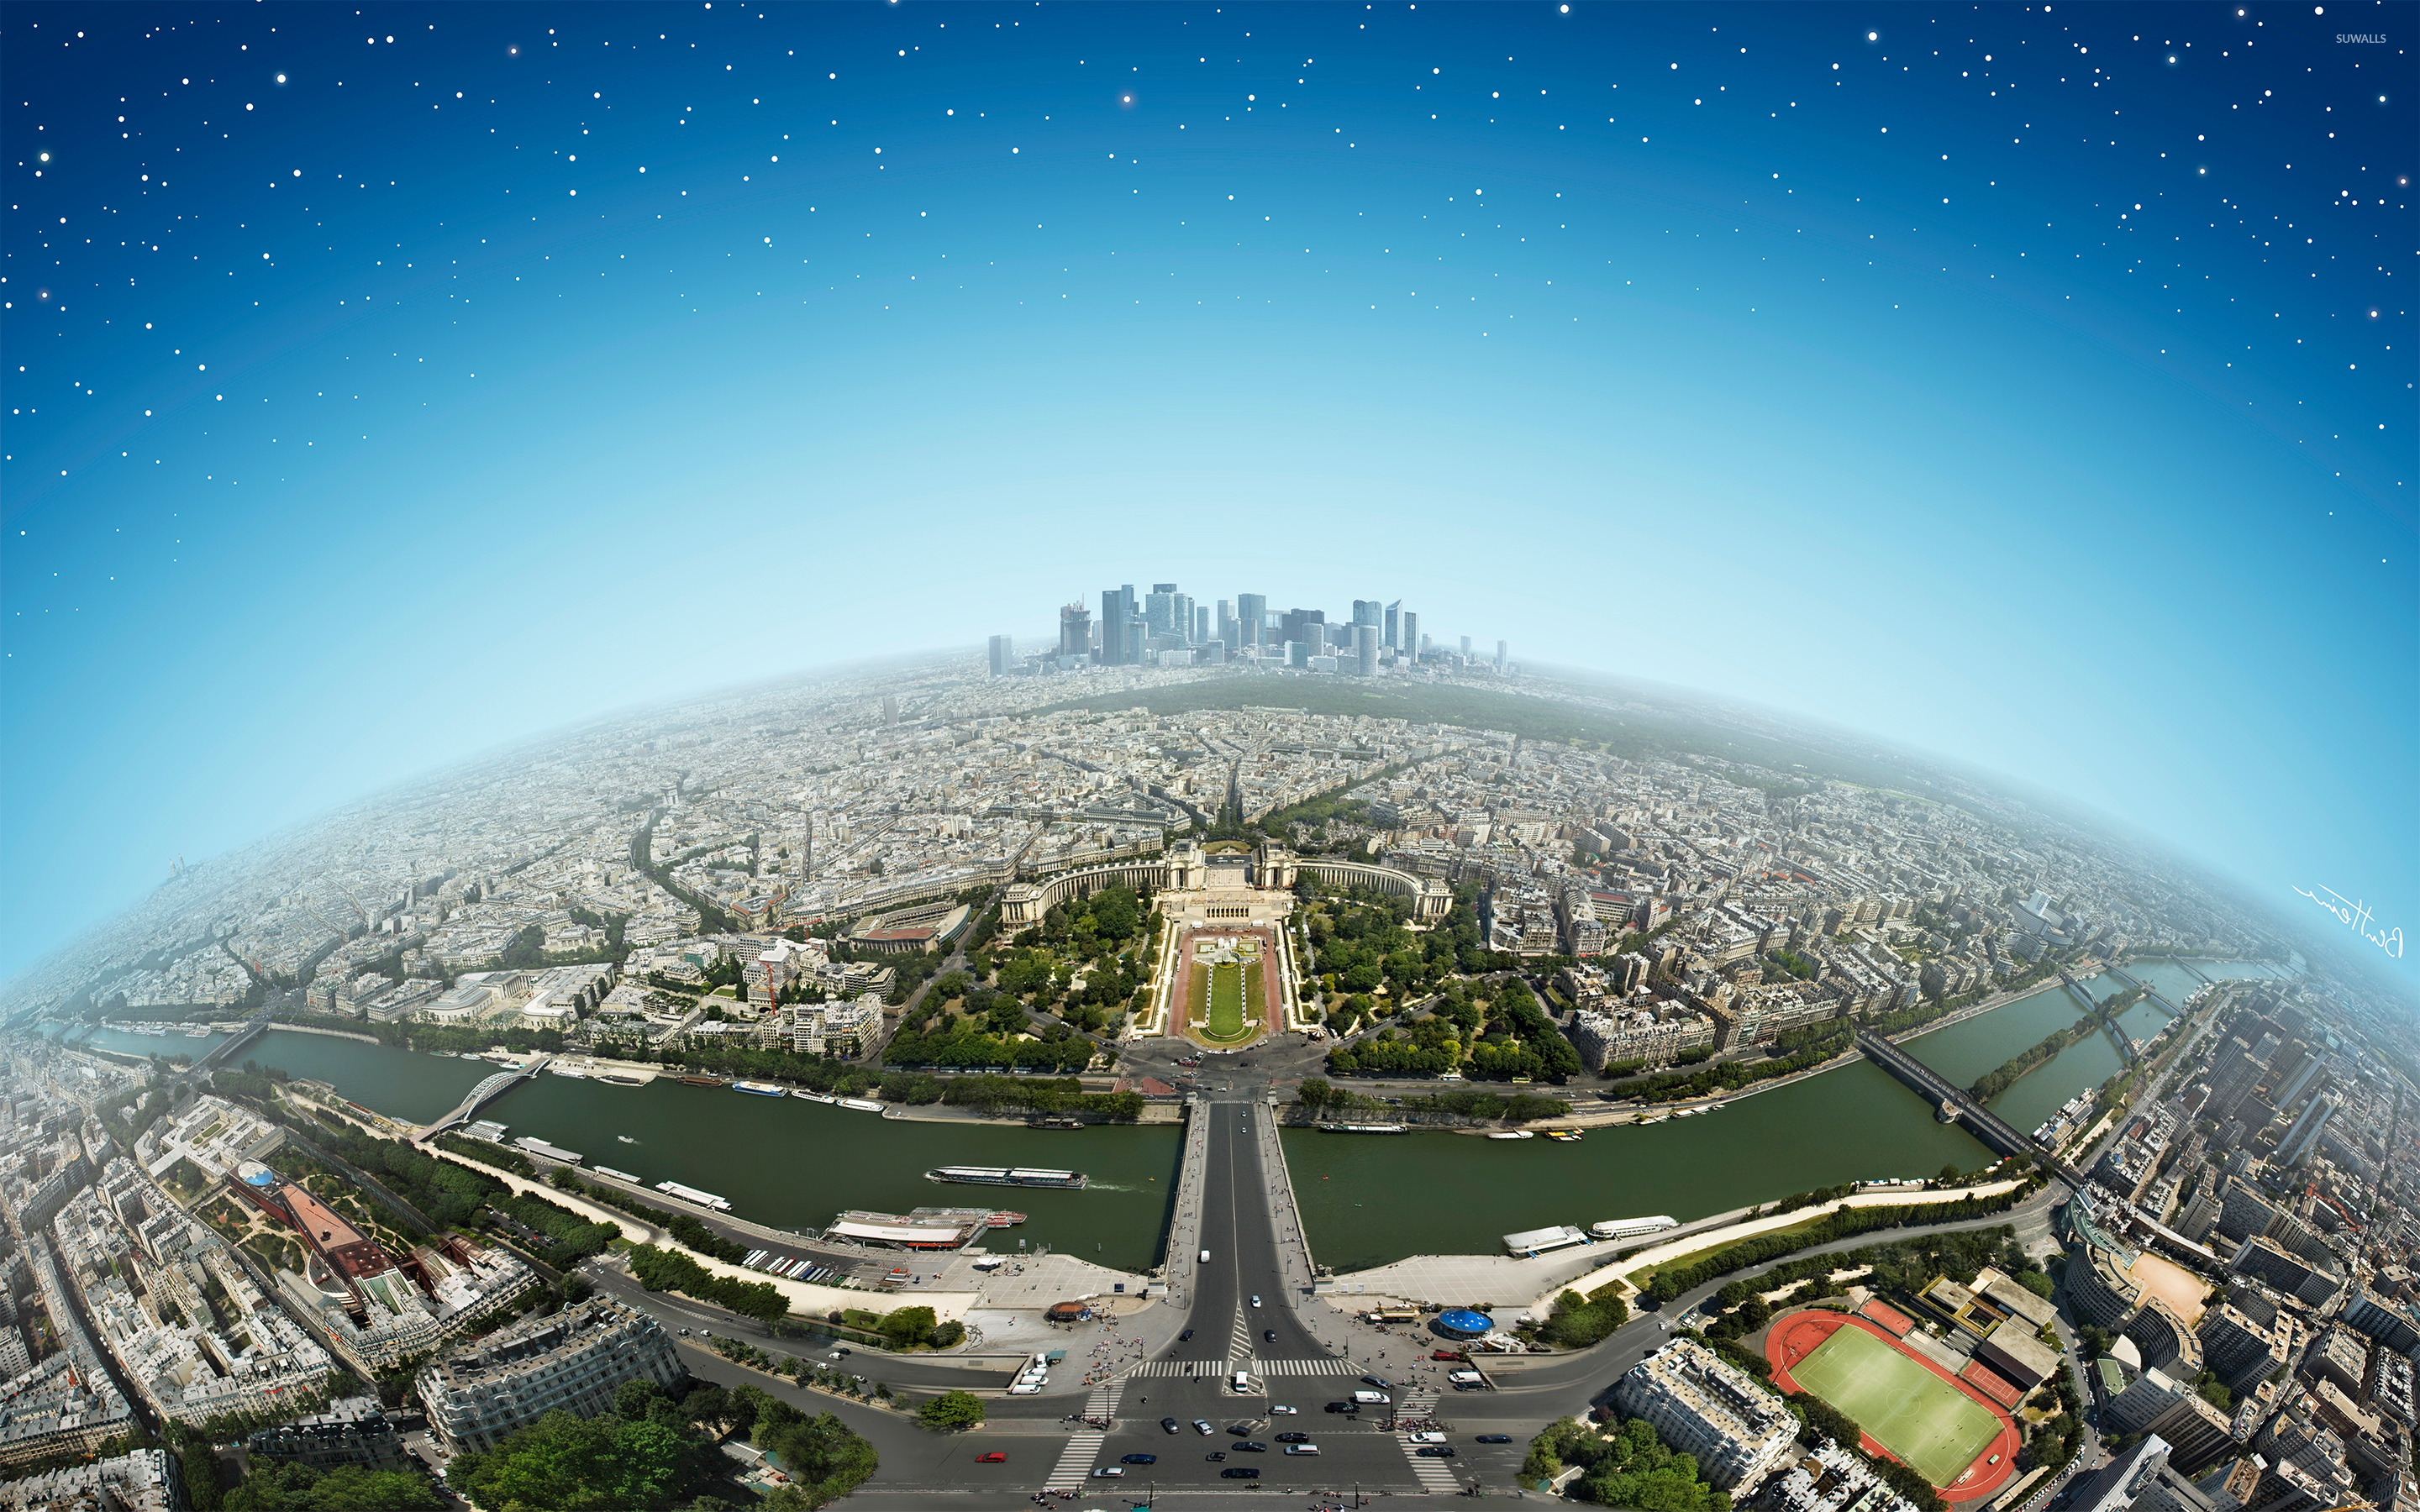 Paris from space wallpaper - Digital Art wallpapers - #31797